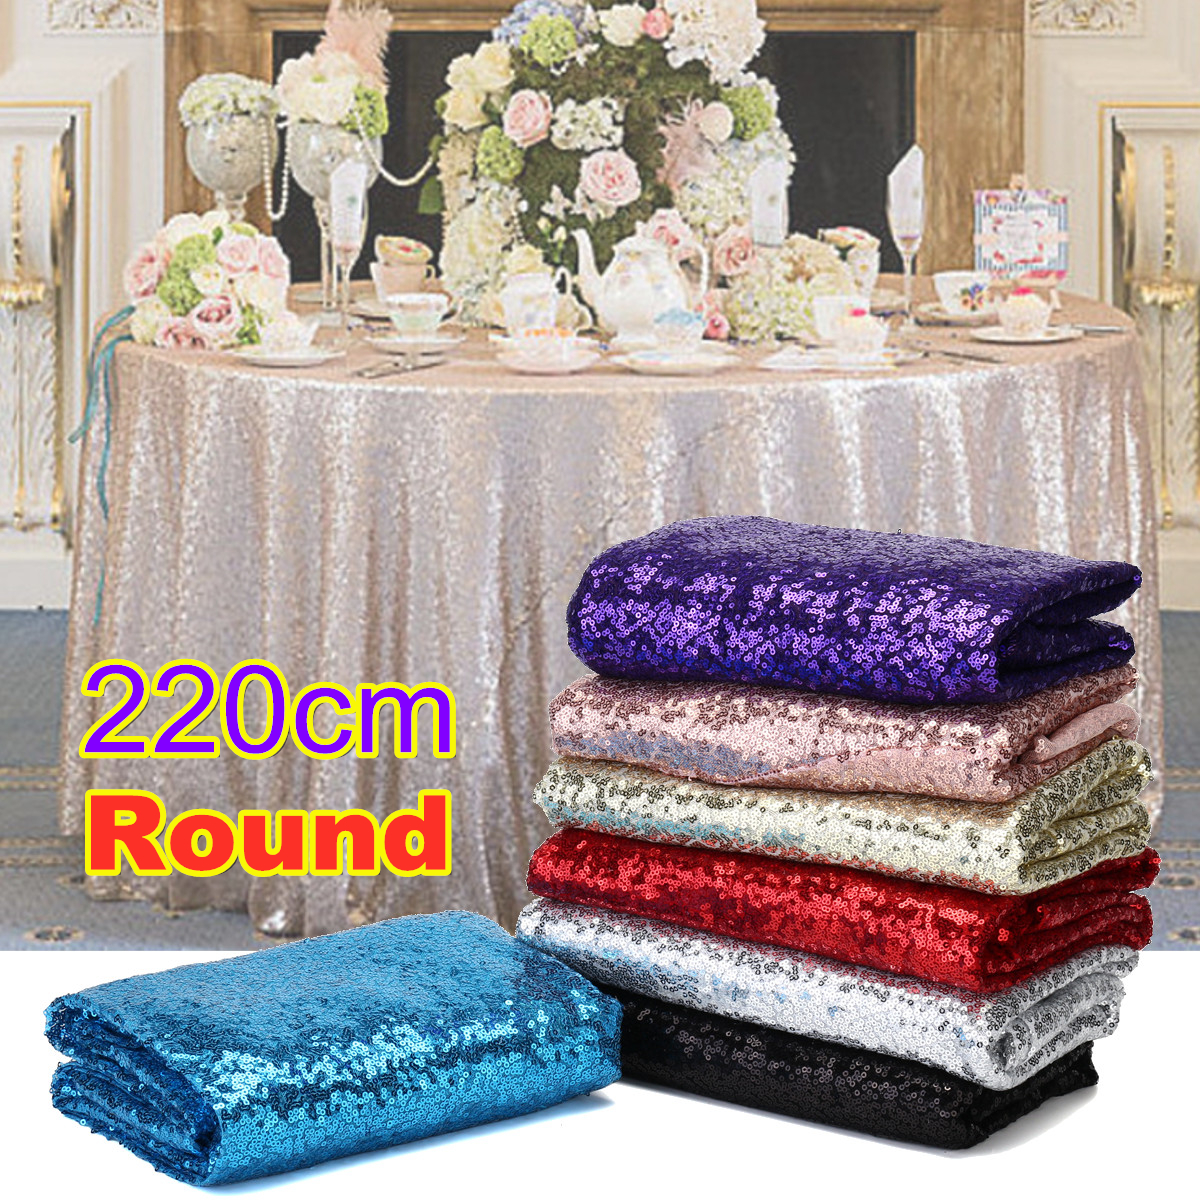 Dekoration Party Genial Details About Round Sparkle Sequin Tablecloth Cover Wedding Party Banquet Decoration 220cm